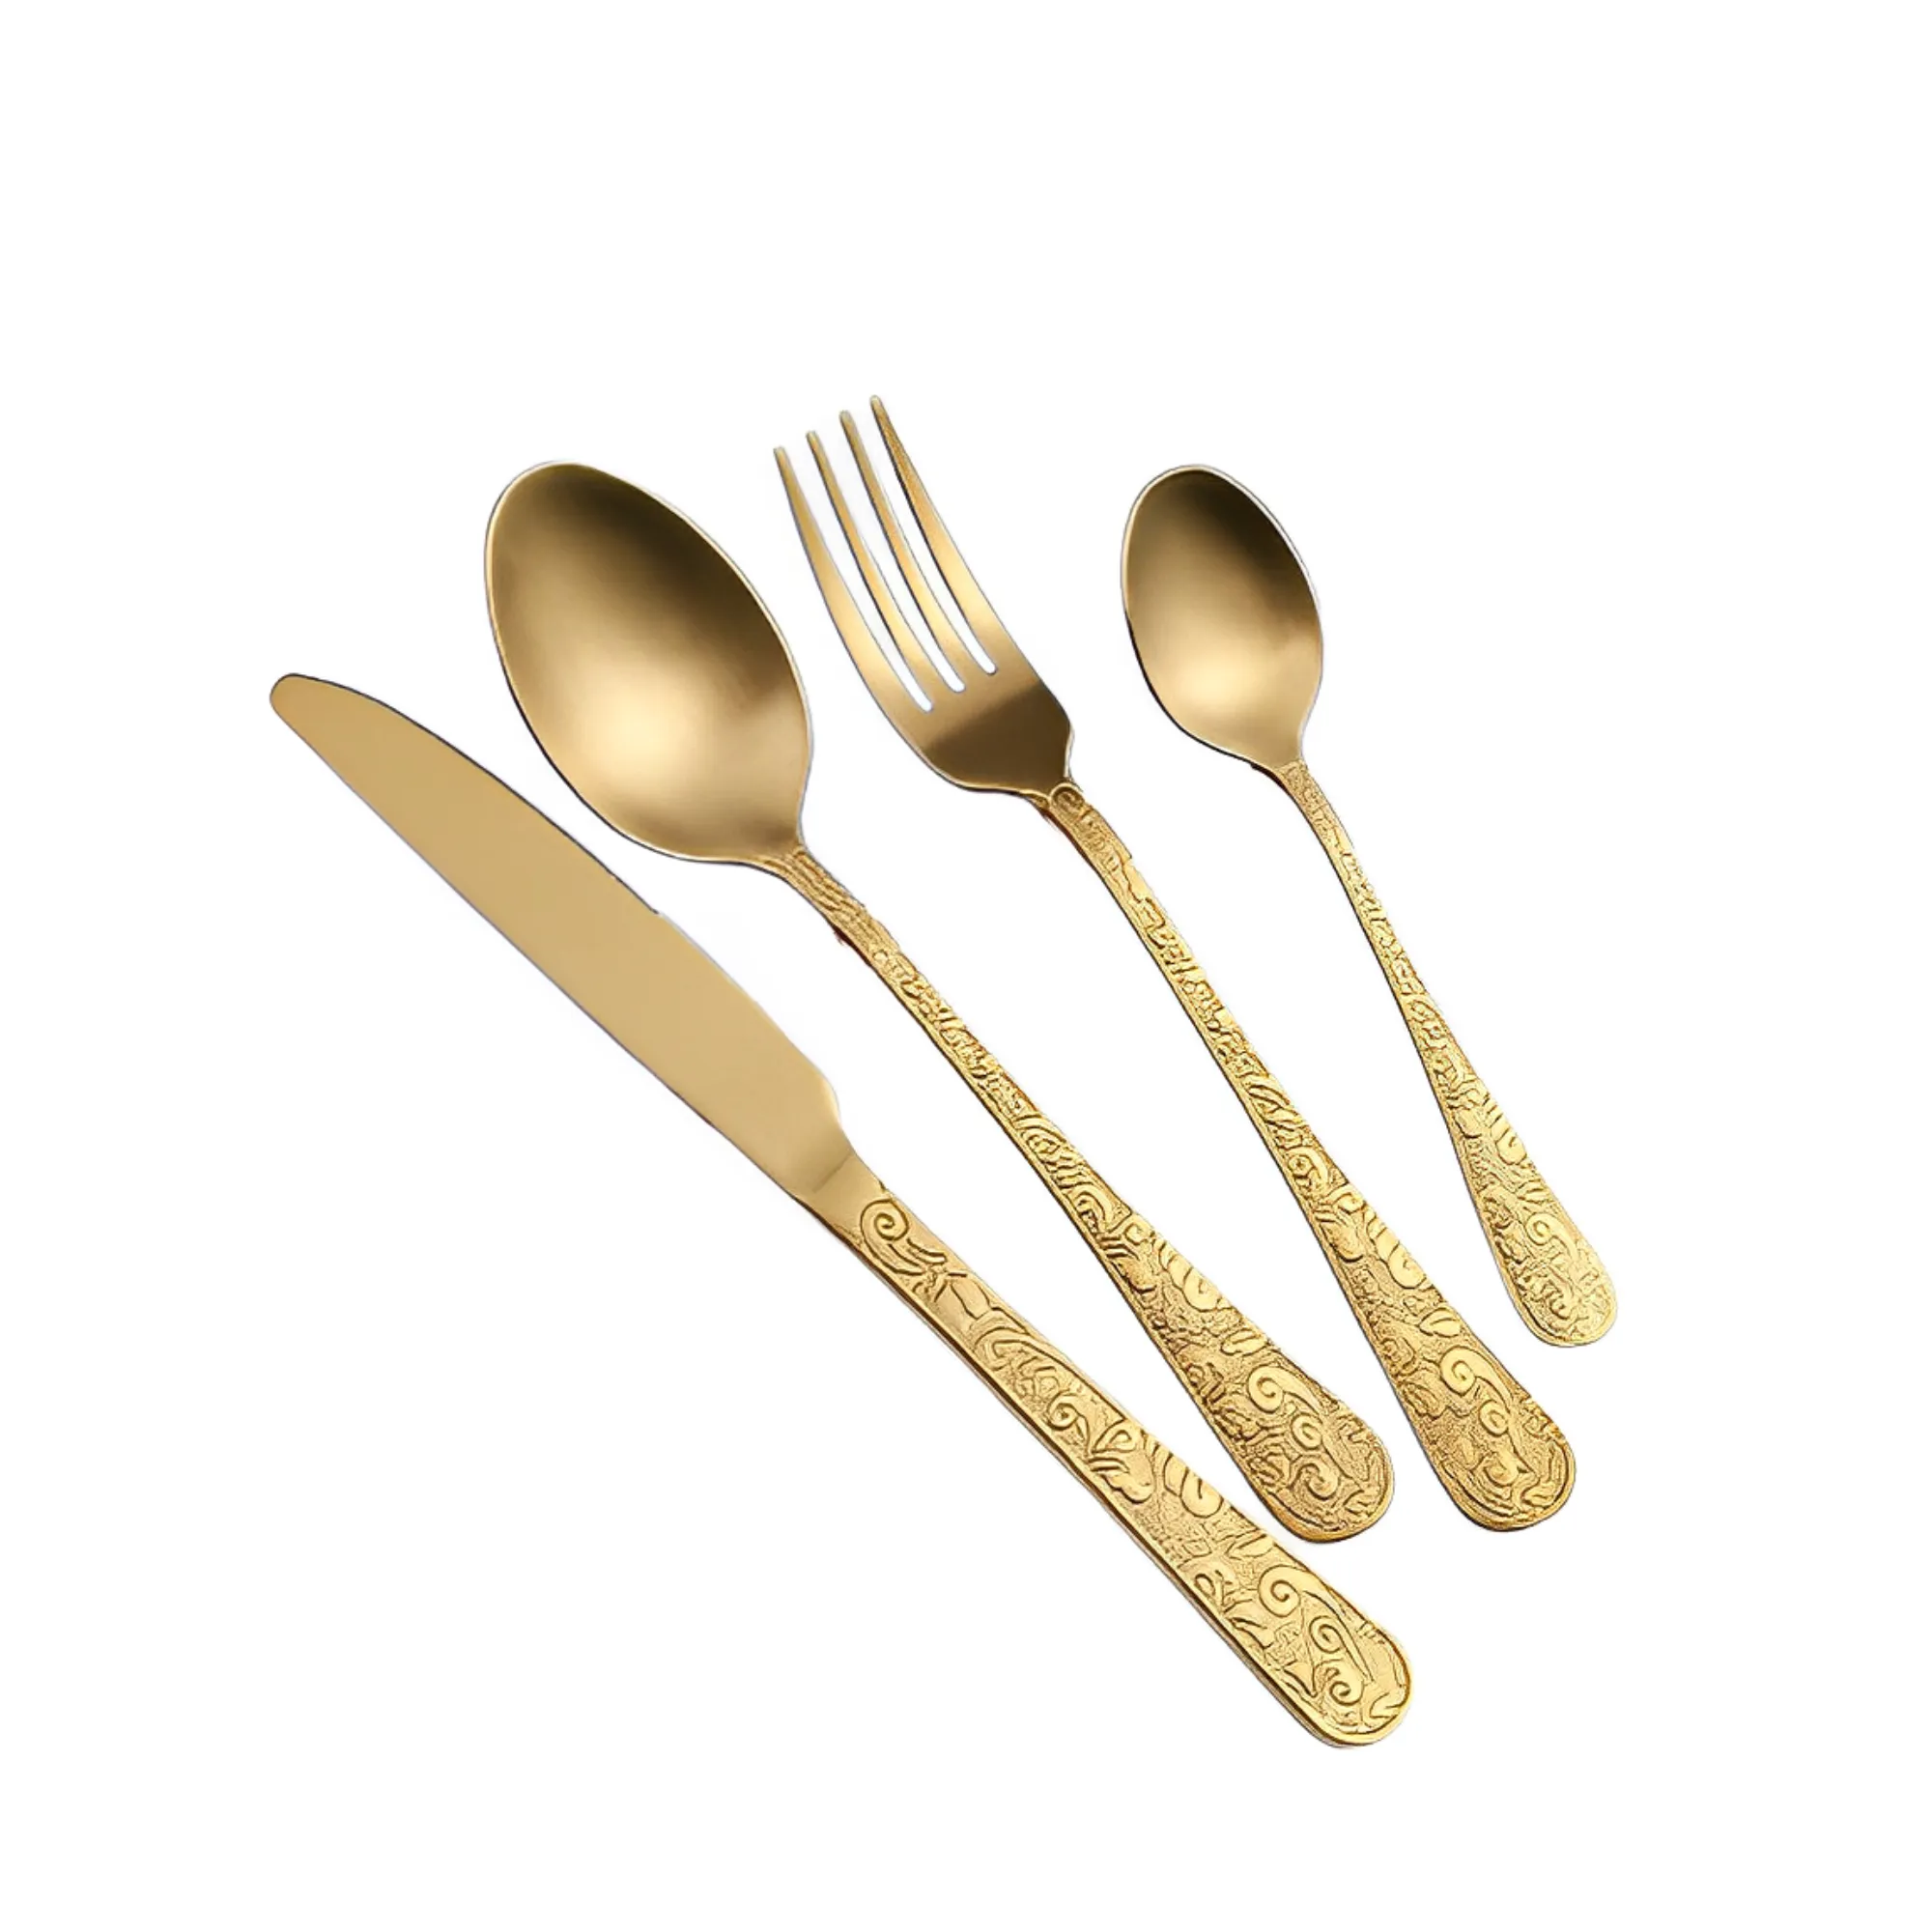 Customize 4 Piece Portugal Cutlery Silverware Matte Gold Stainless Steel Fork Knife Spoon Flatware Set for Restaurant & Wedding